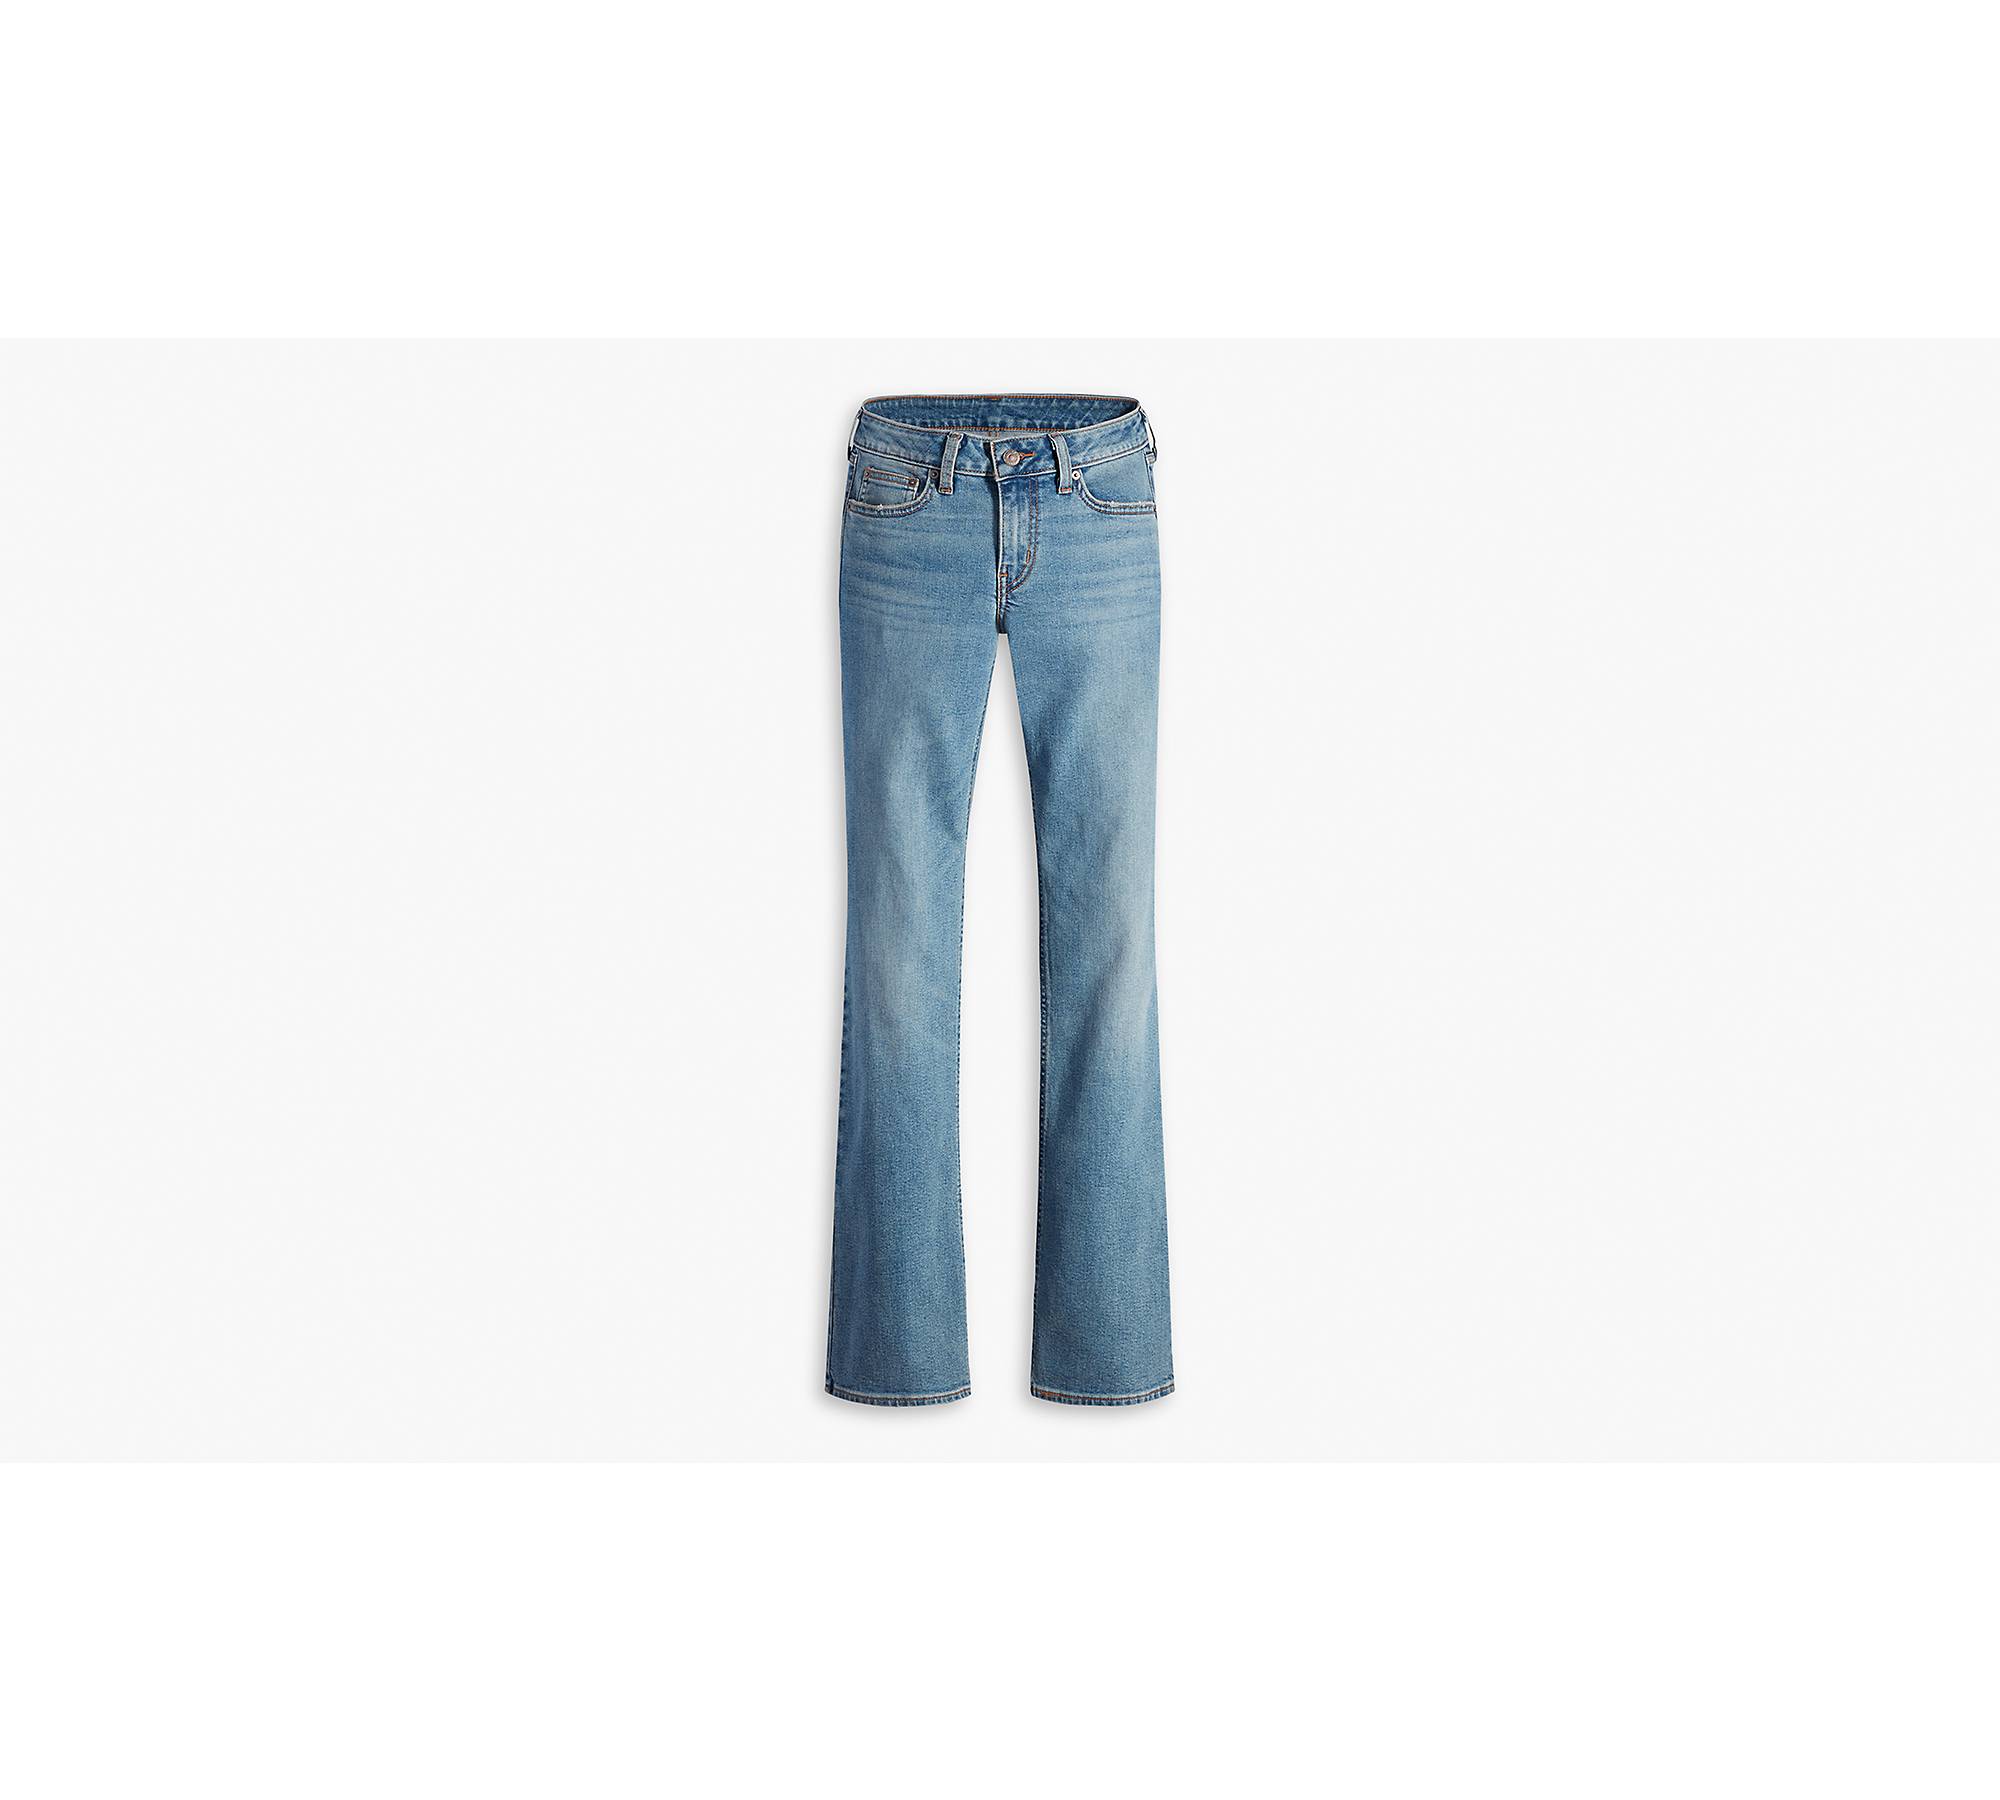 Pantalon Jeans Levis Mujer 715 Bootcut Original